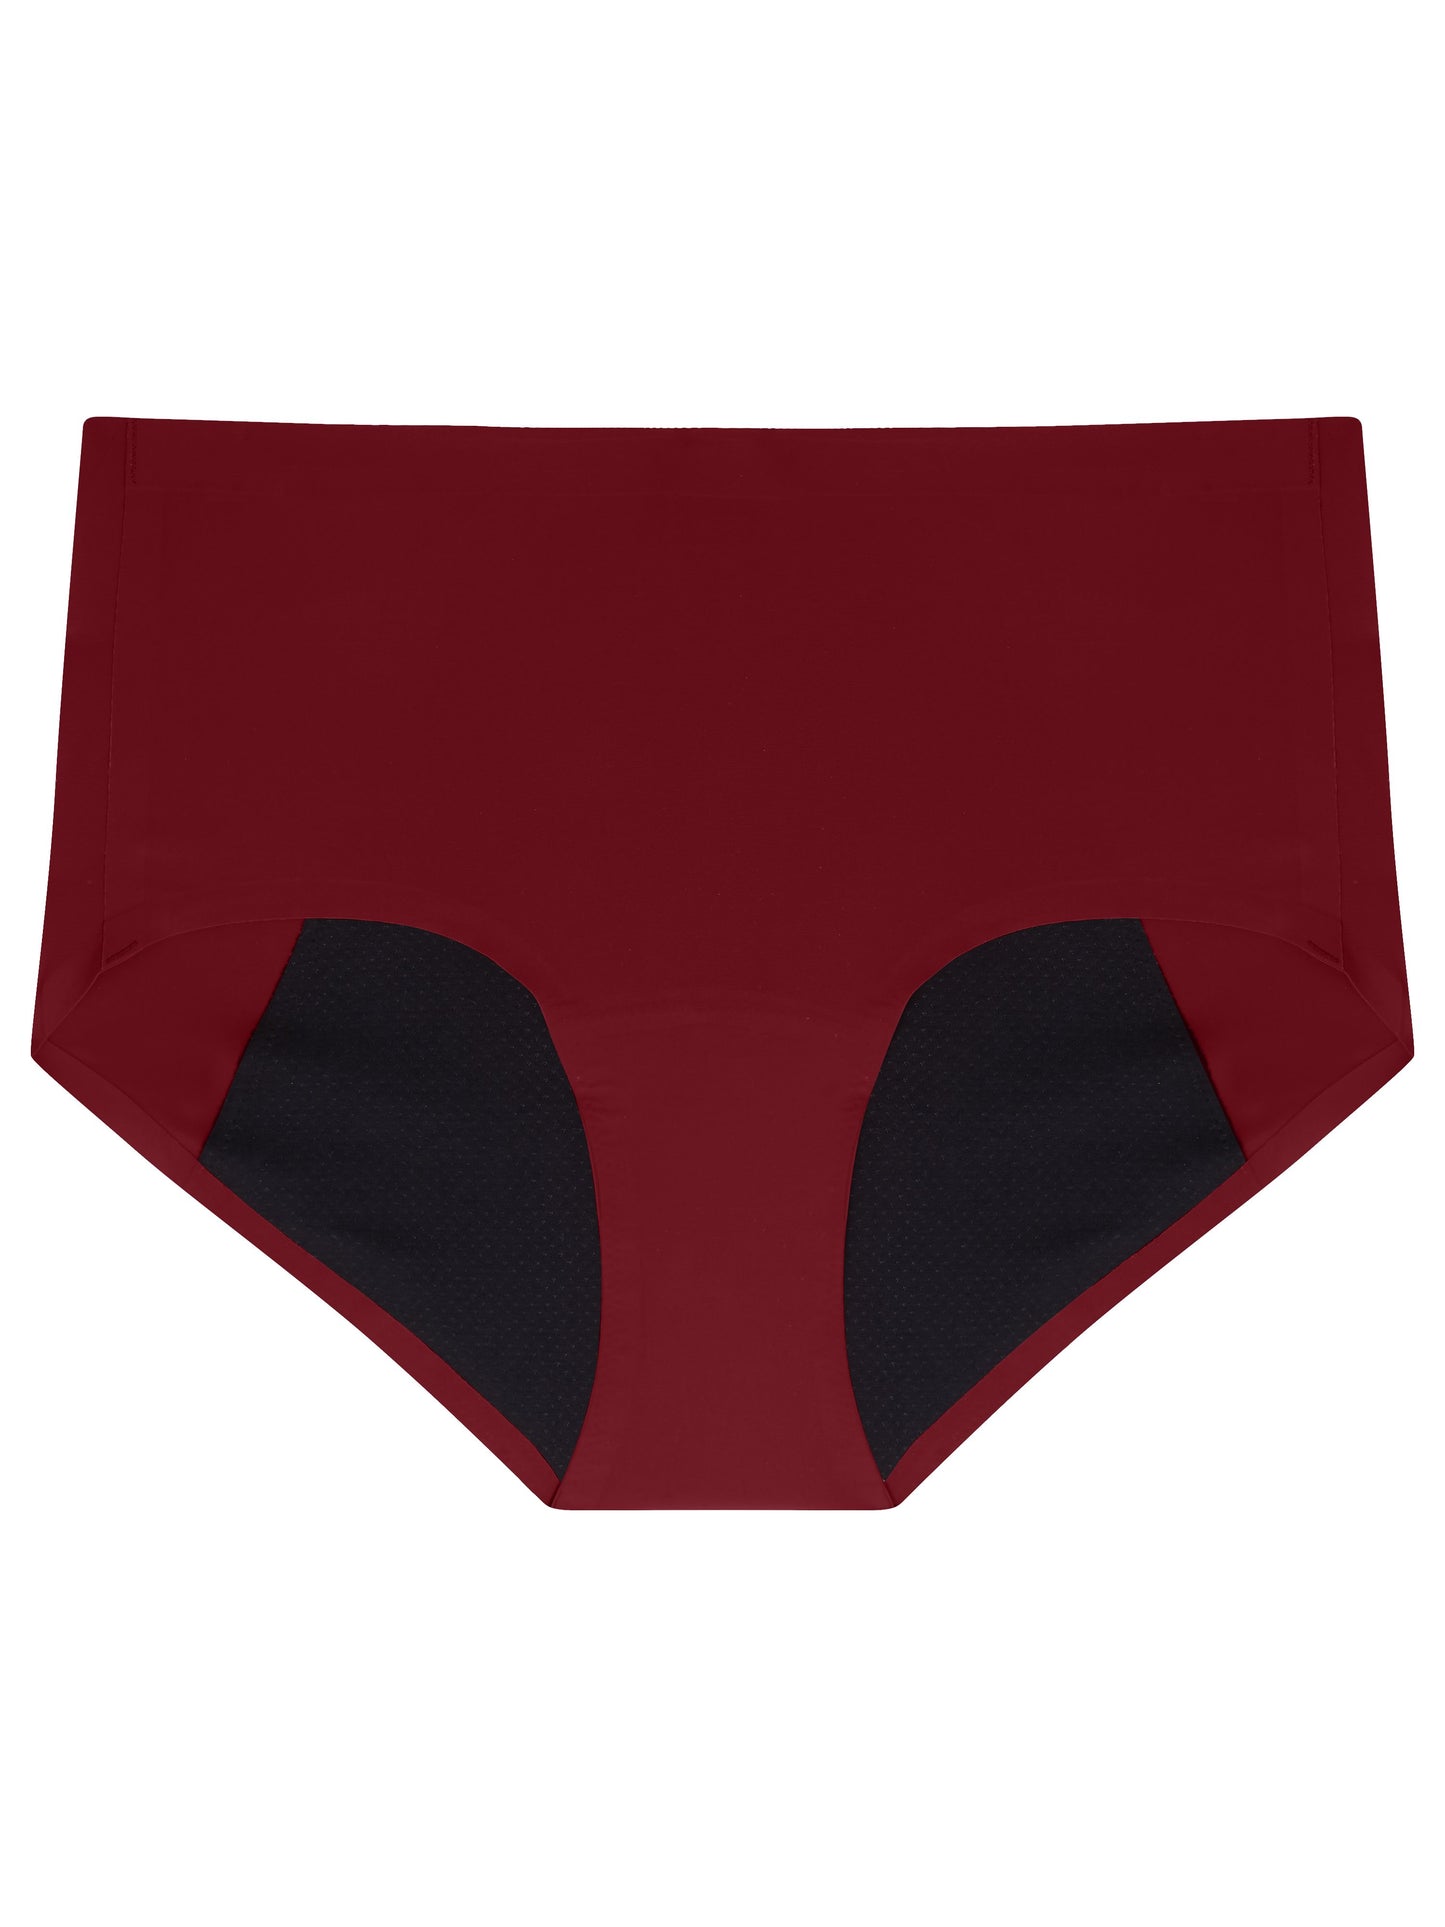 Imaara Feminine Period Underwear Inclusive Knickers. Product Serma Rhubarb